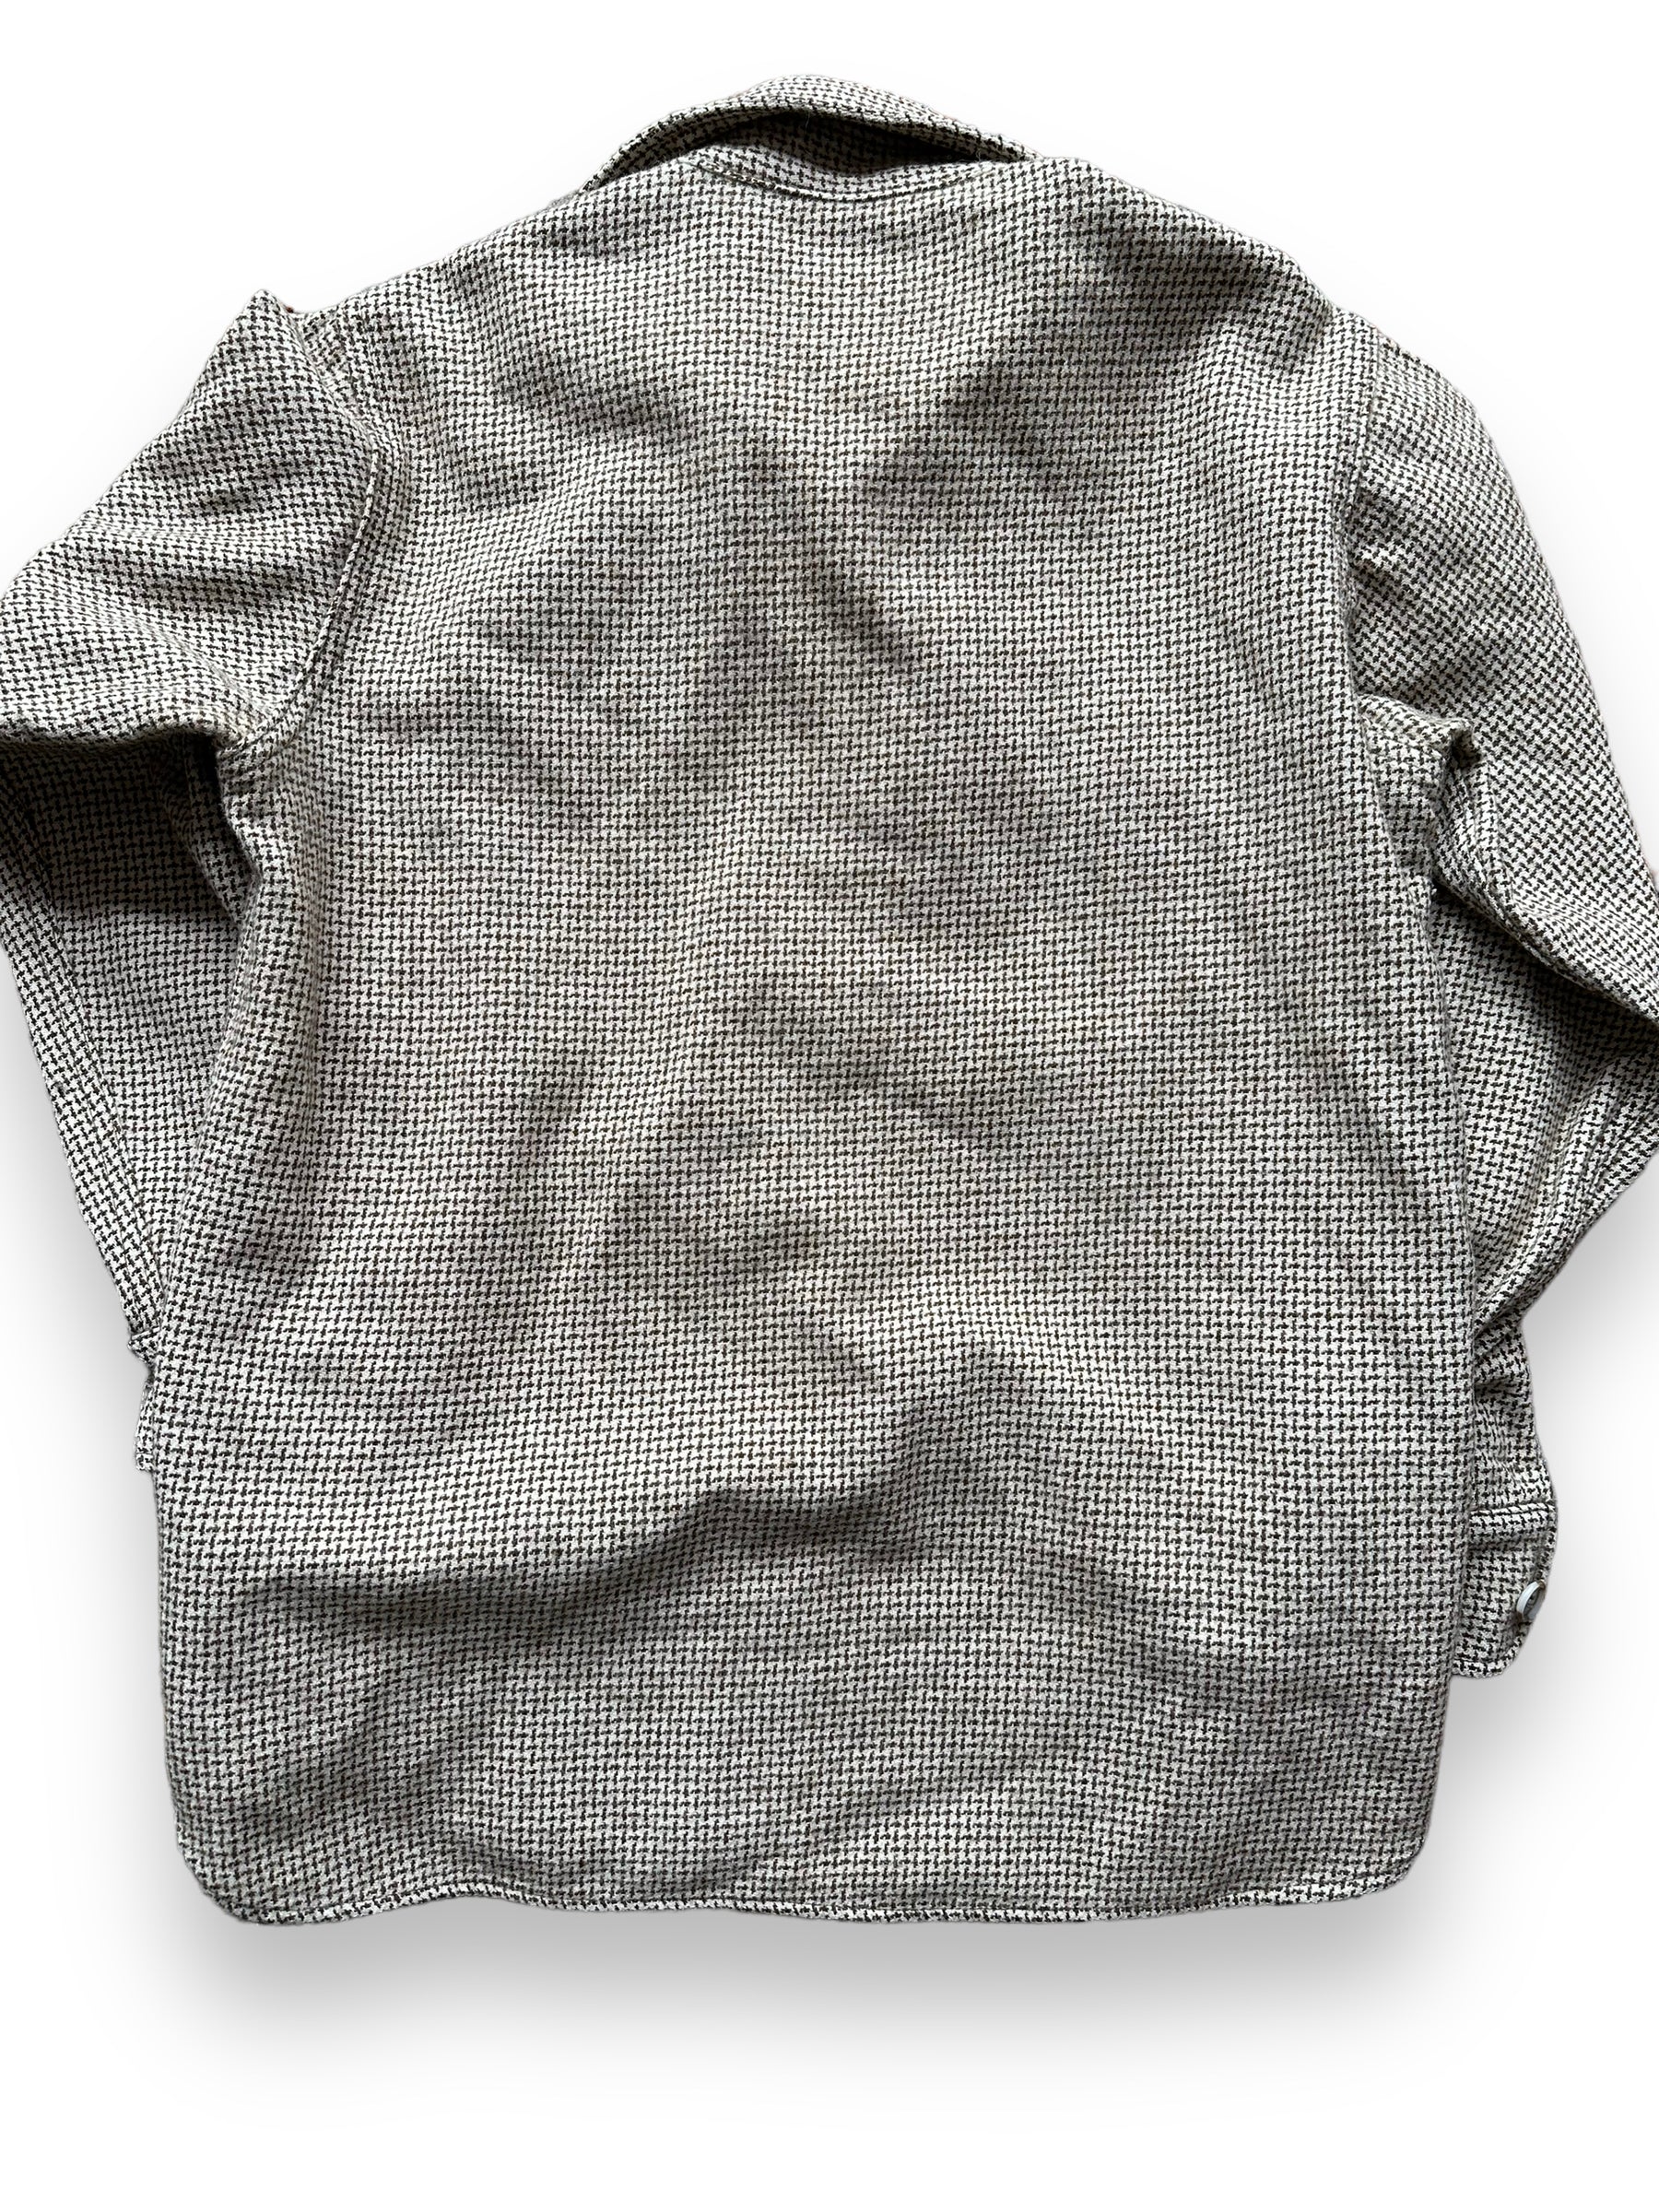 Rear Detail on Vintage Tan Houndstooth Woolrich Shirt Jacket SZ M |  Barn Owl Vintage Goods | Vintage Workwear Seattle